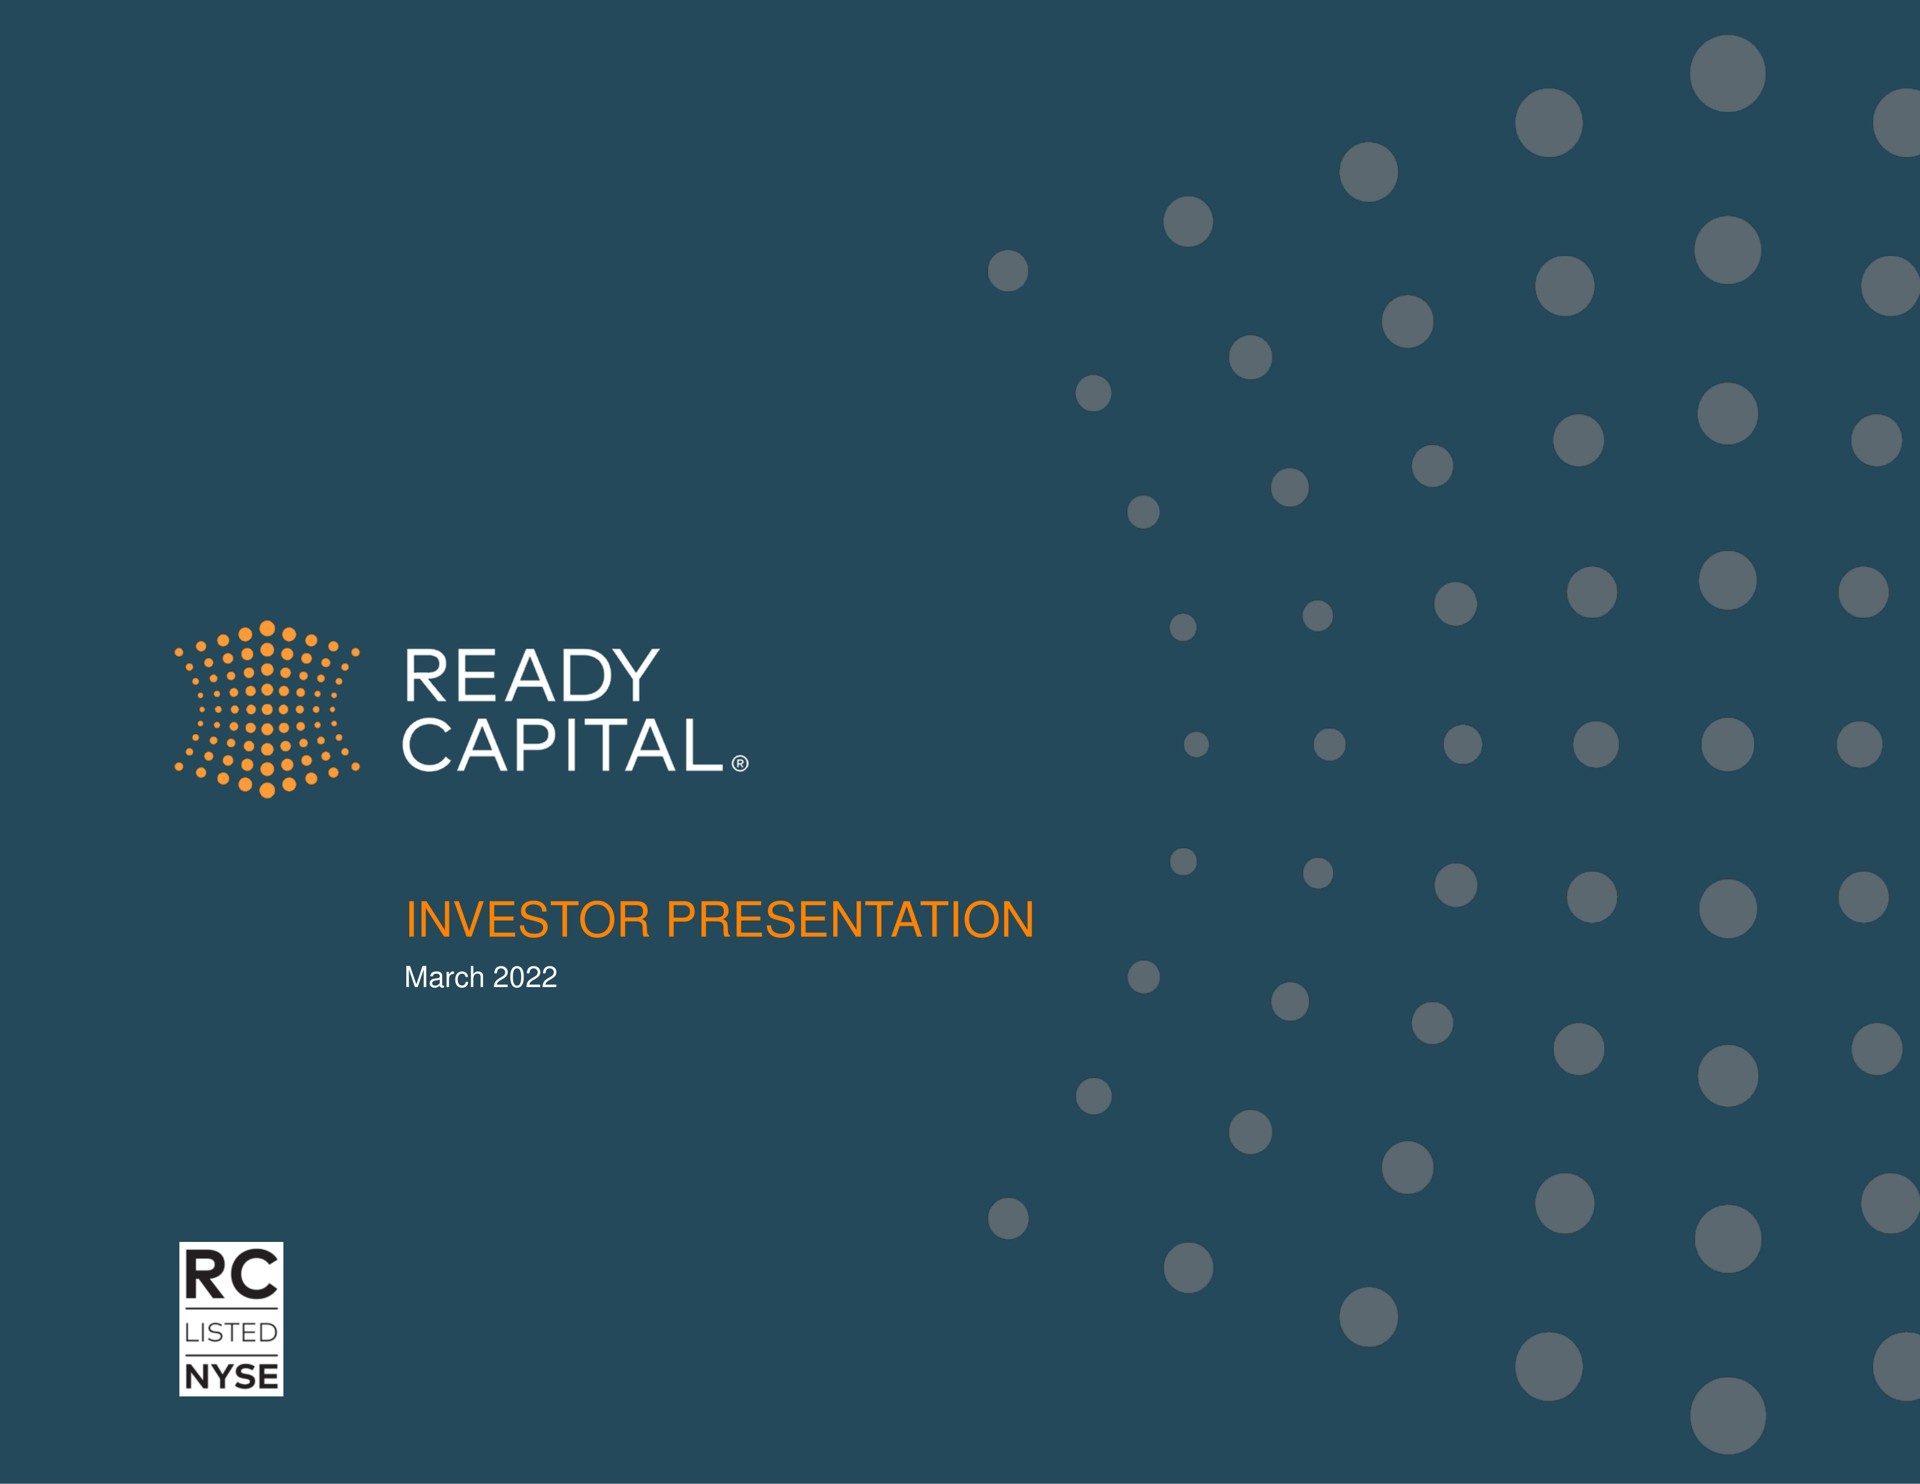 dee capital investor presentation | Ready Capital